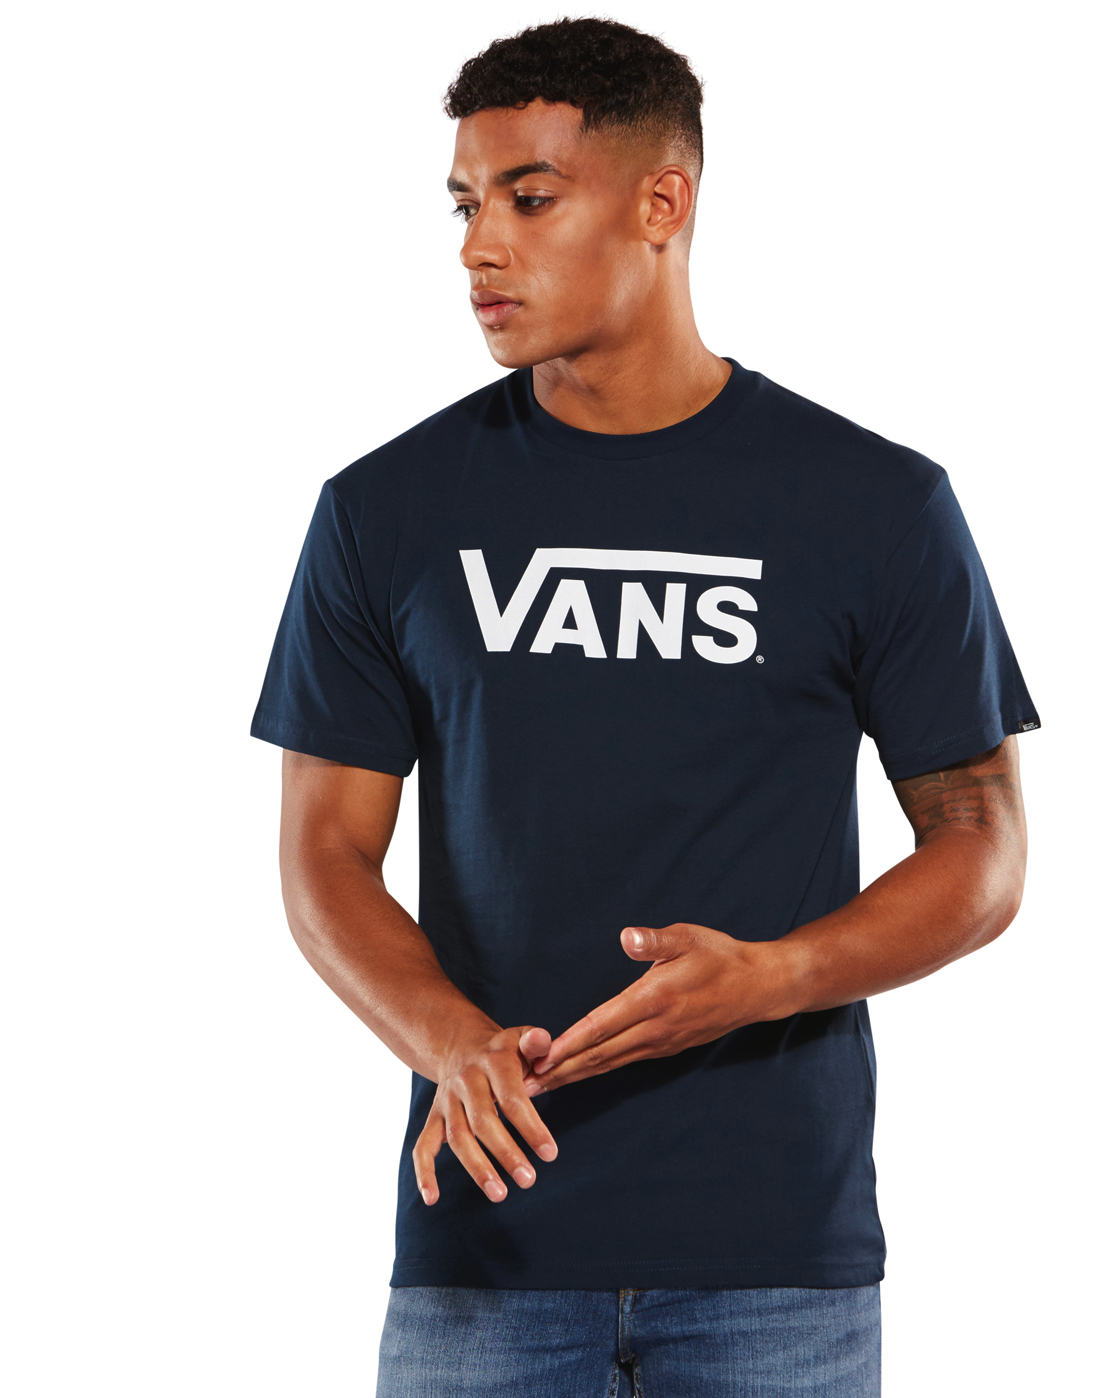 Vans Mens Classic Tshirt - Navy | Life Style Sports IE